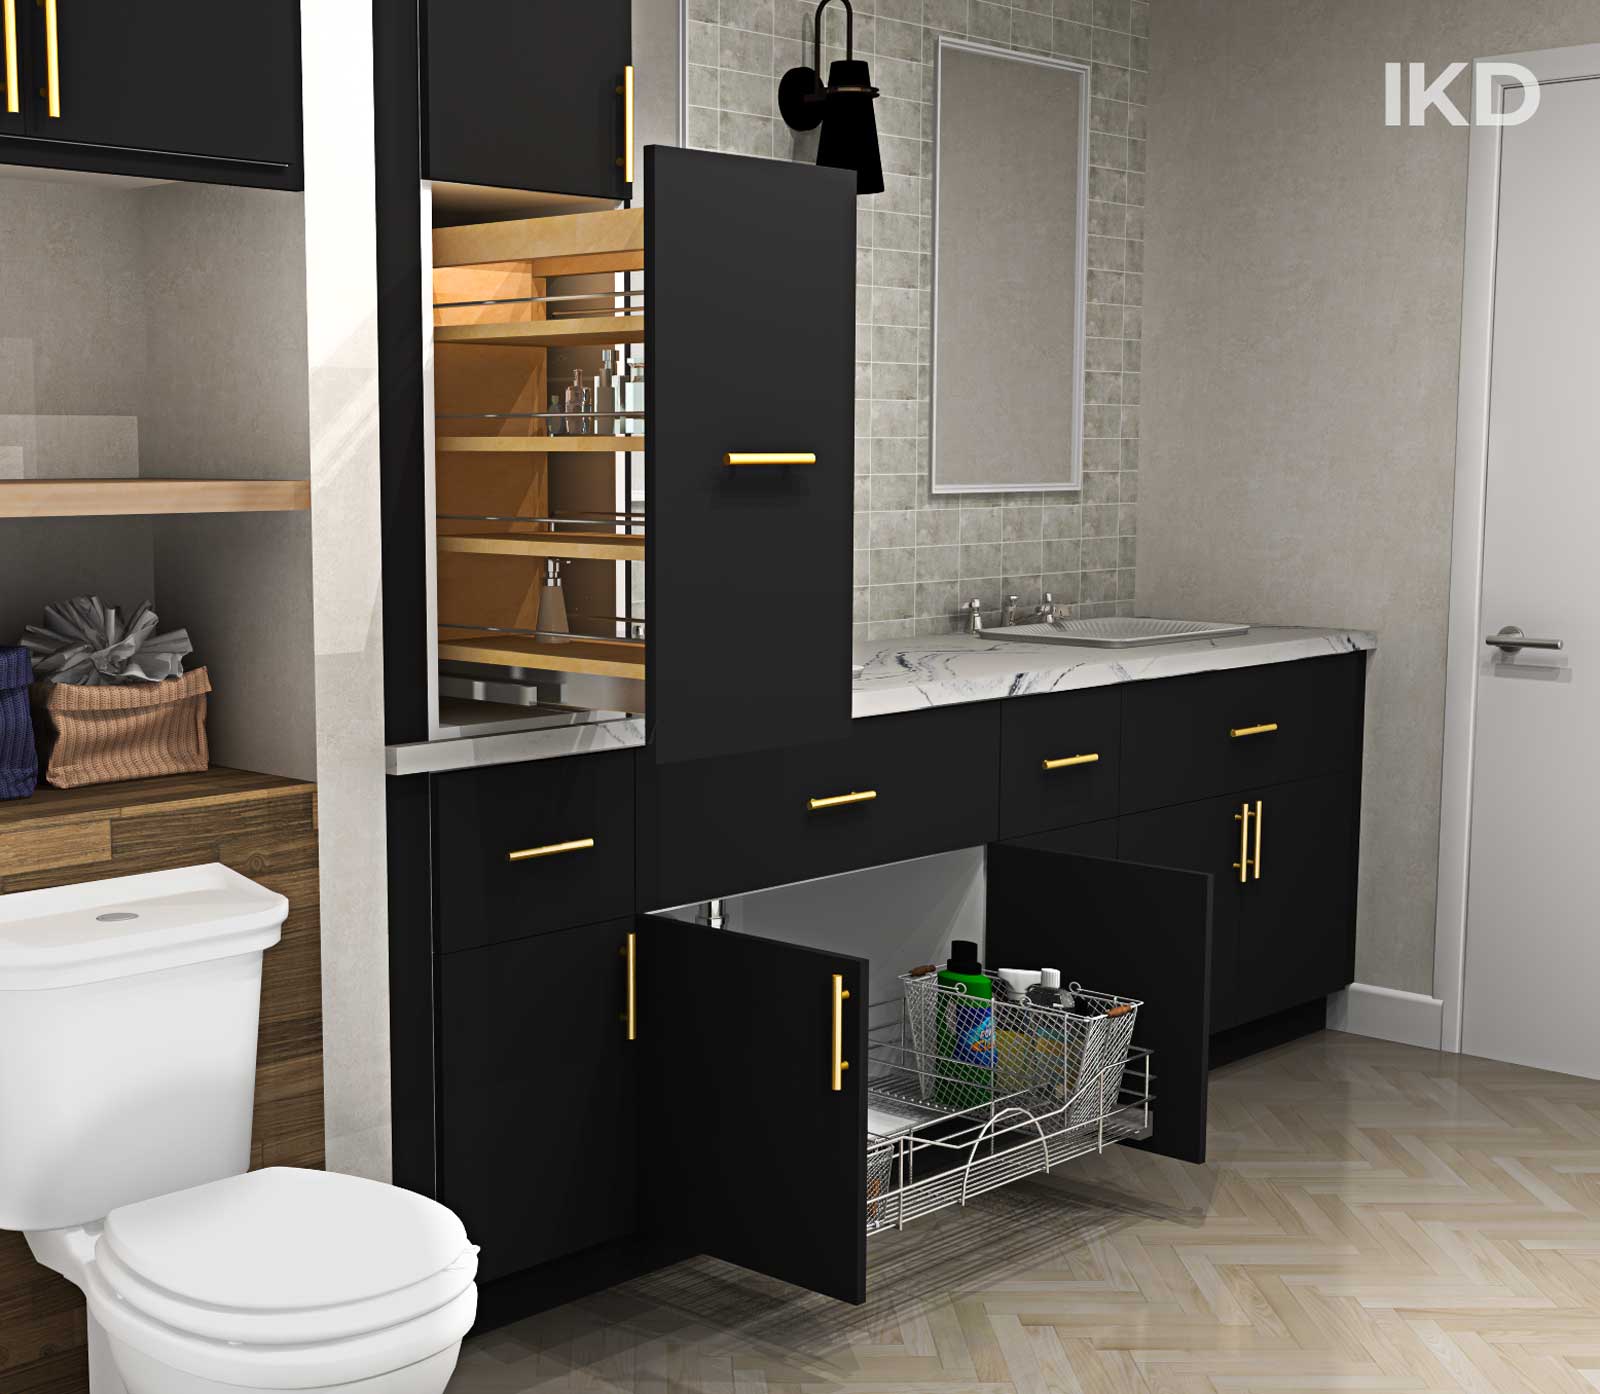 4 IKEA Design Hacks to Create More Storage in a Small Bathroom